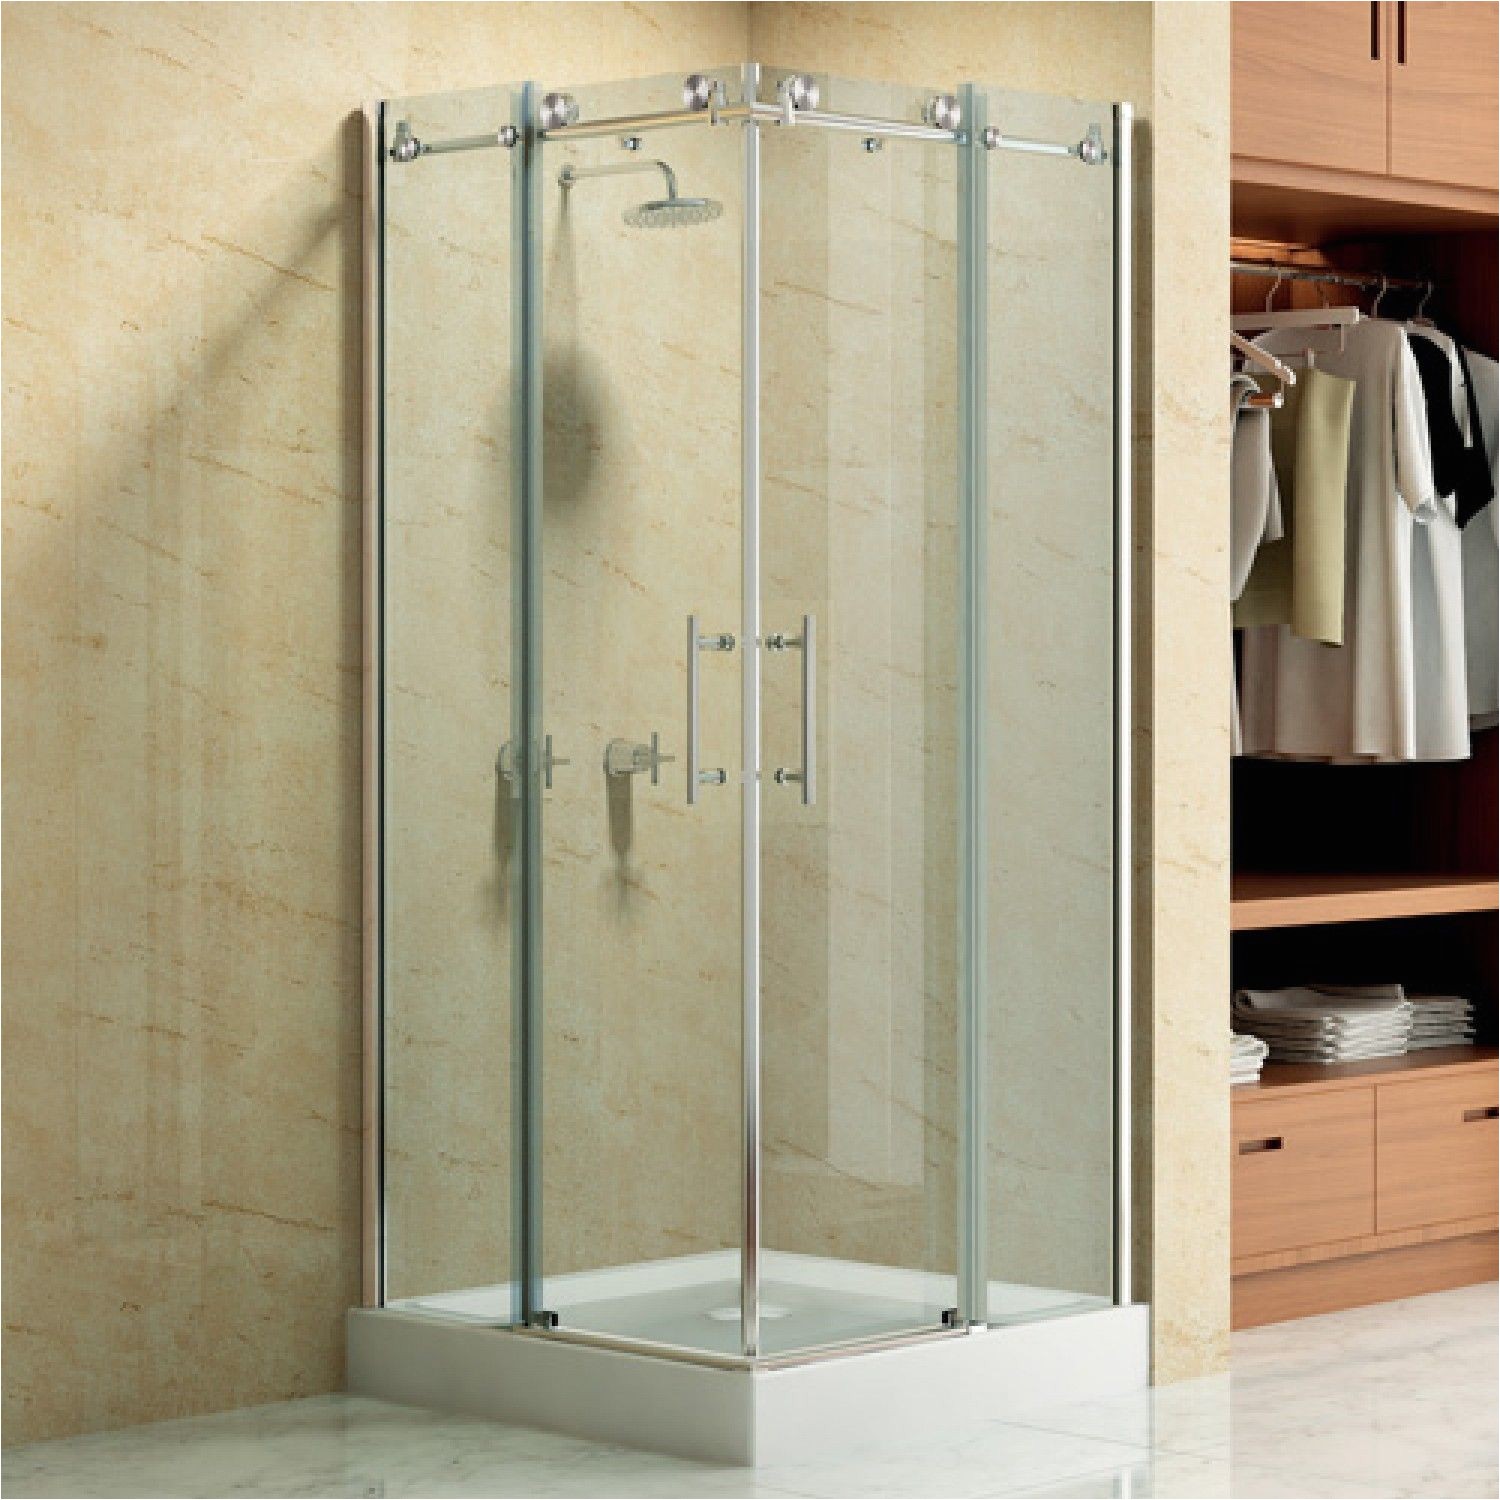 36 x 36 square frameless corner shower enclosure with dual sliding doors bathroom